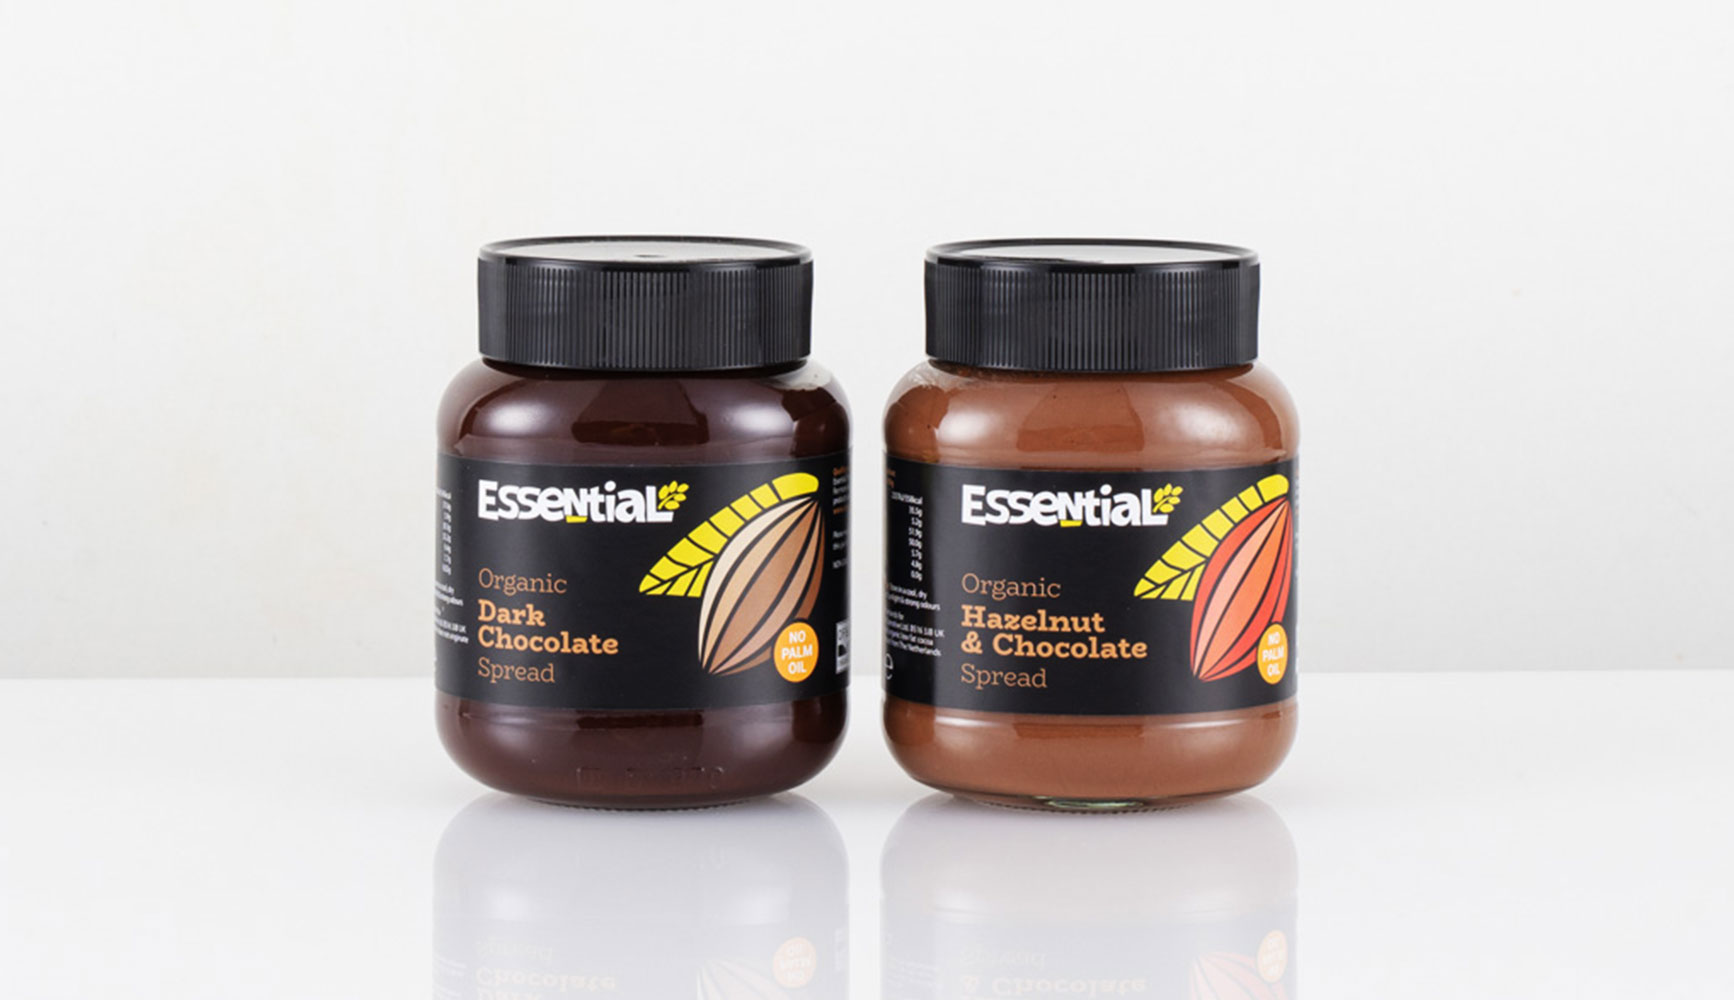 Essential organic Chocolate Spread in jars